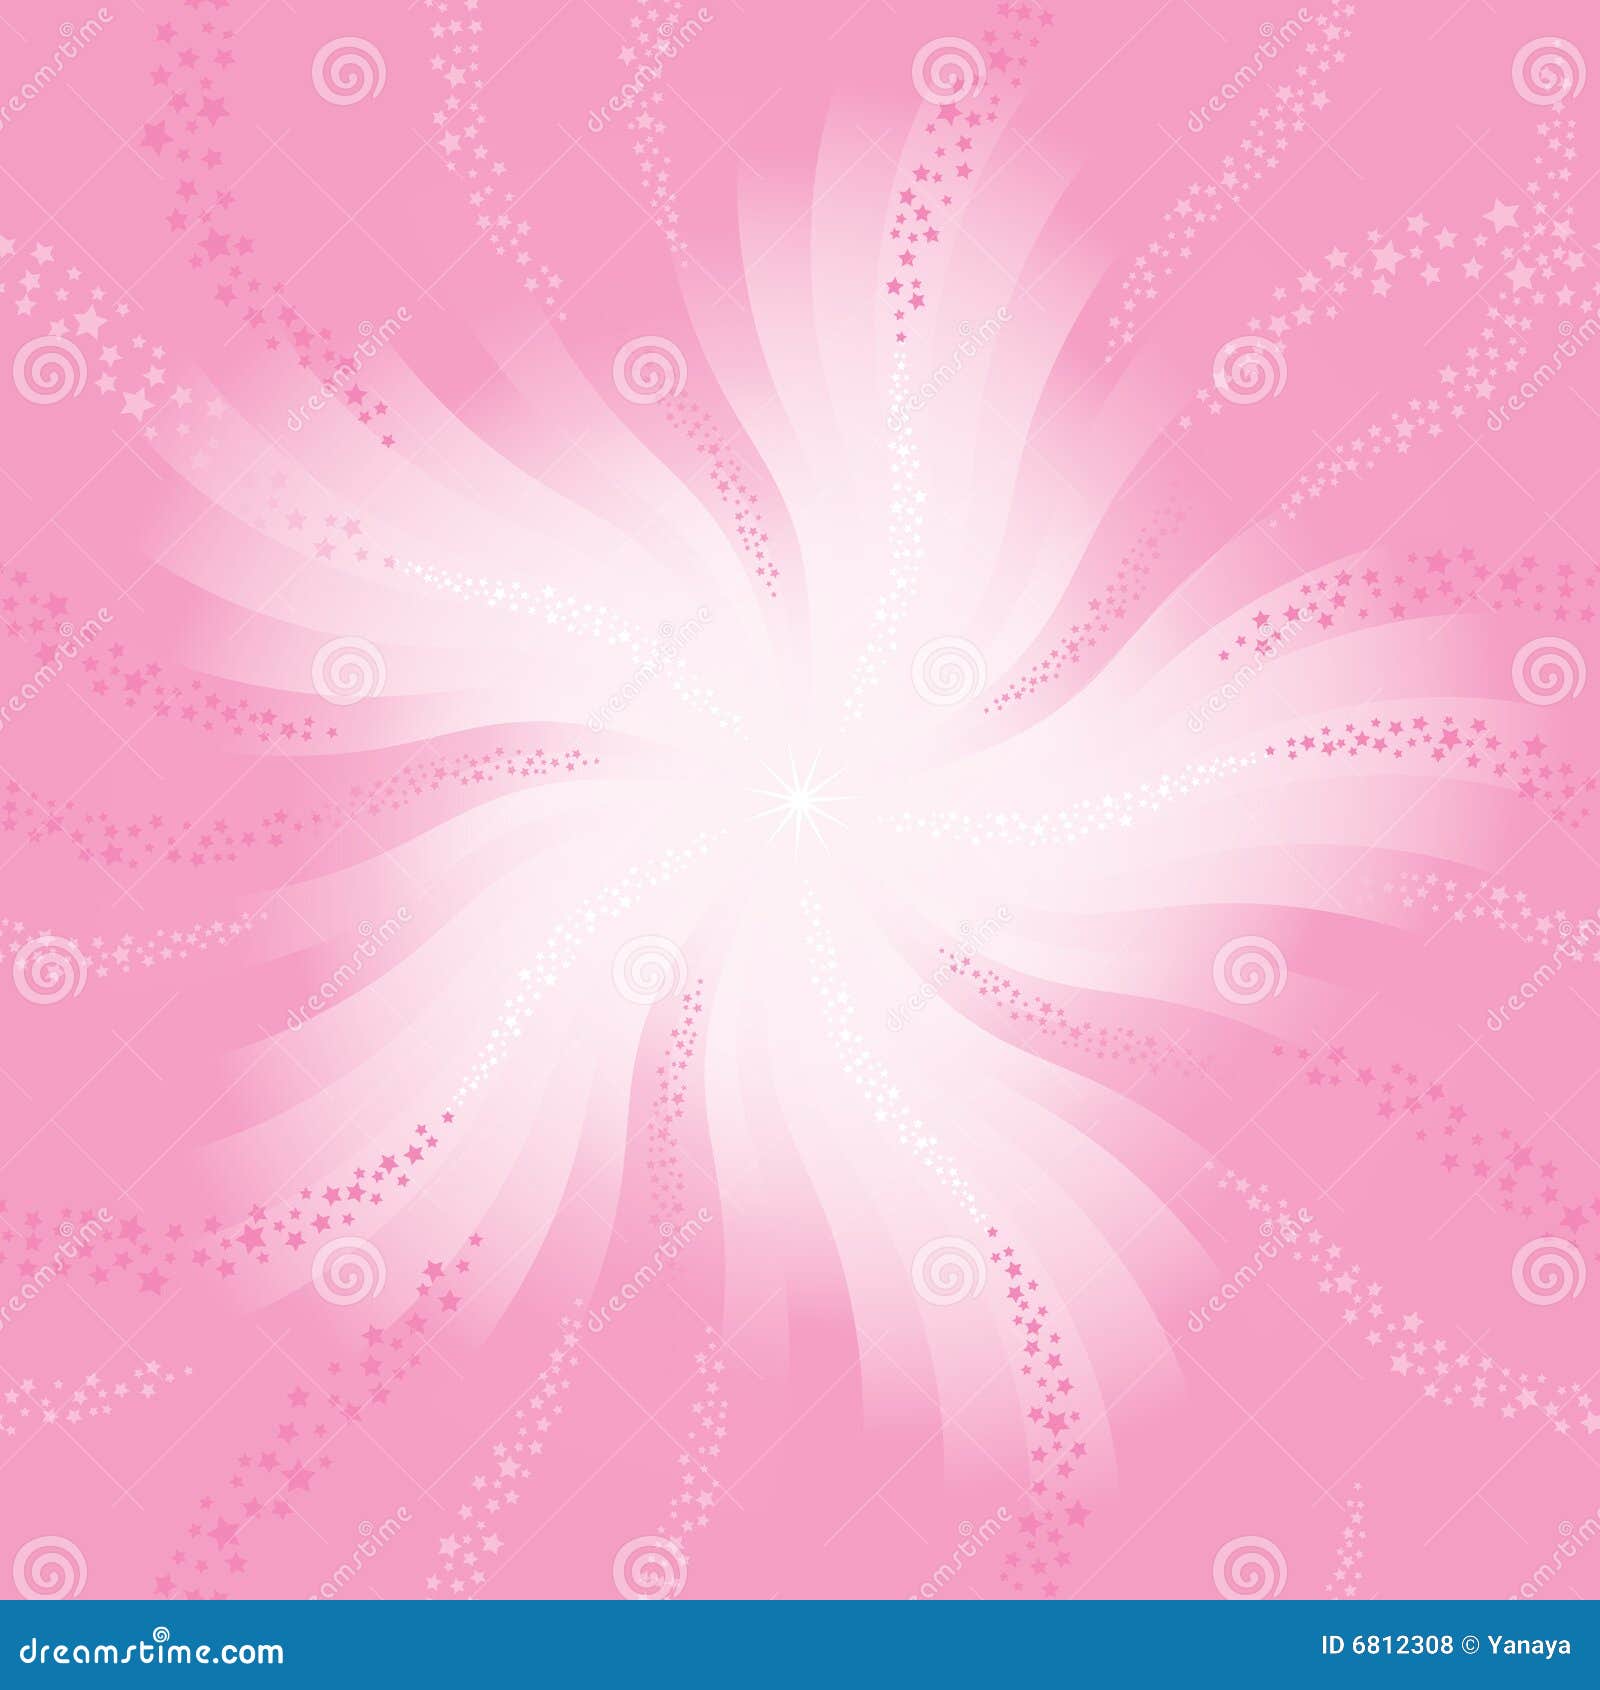 star wallpaper pink